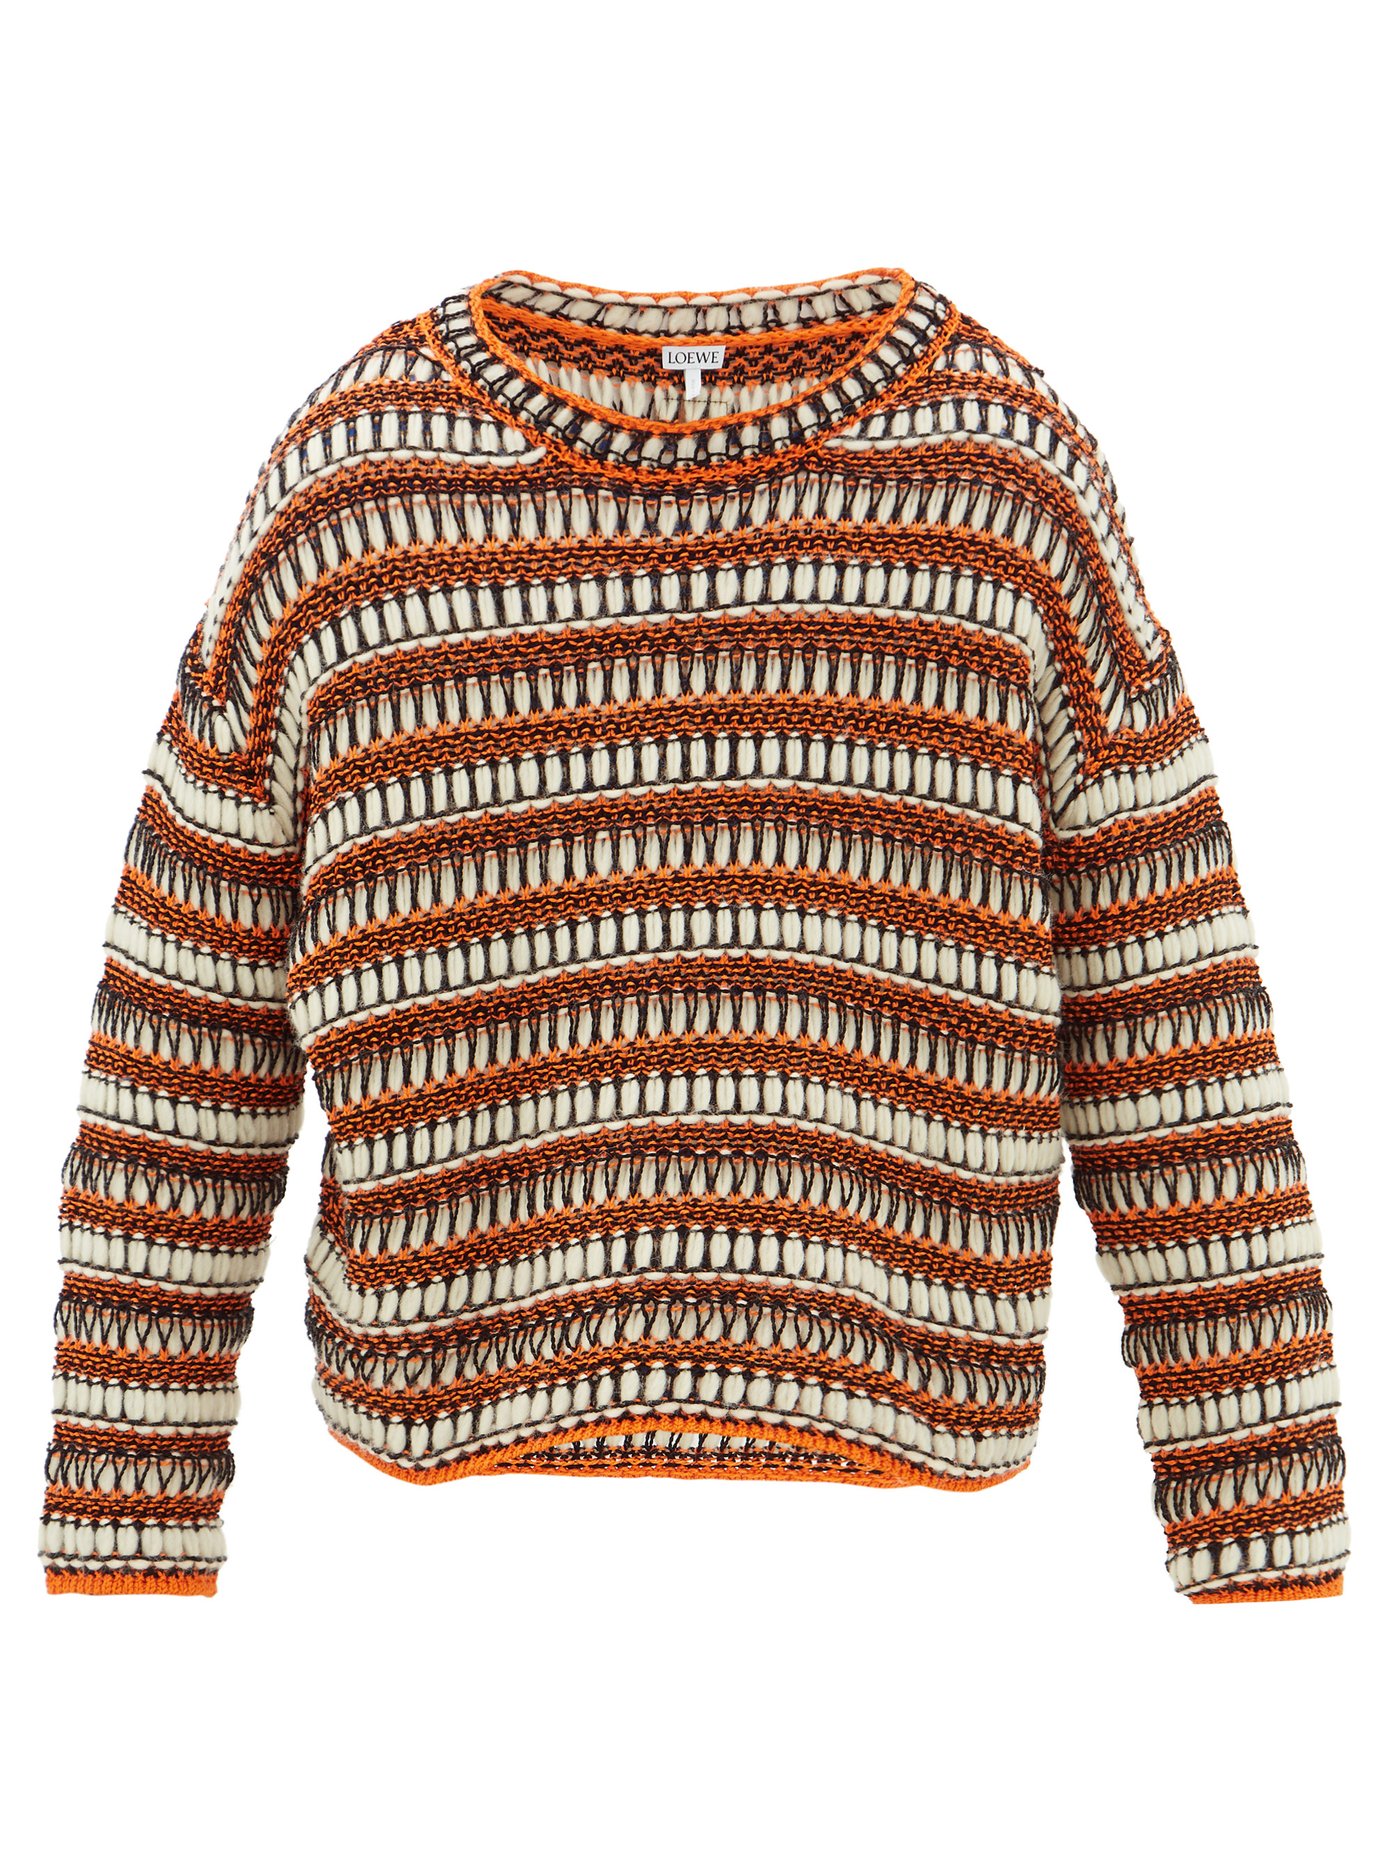 loewe sweater sale